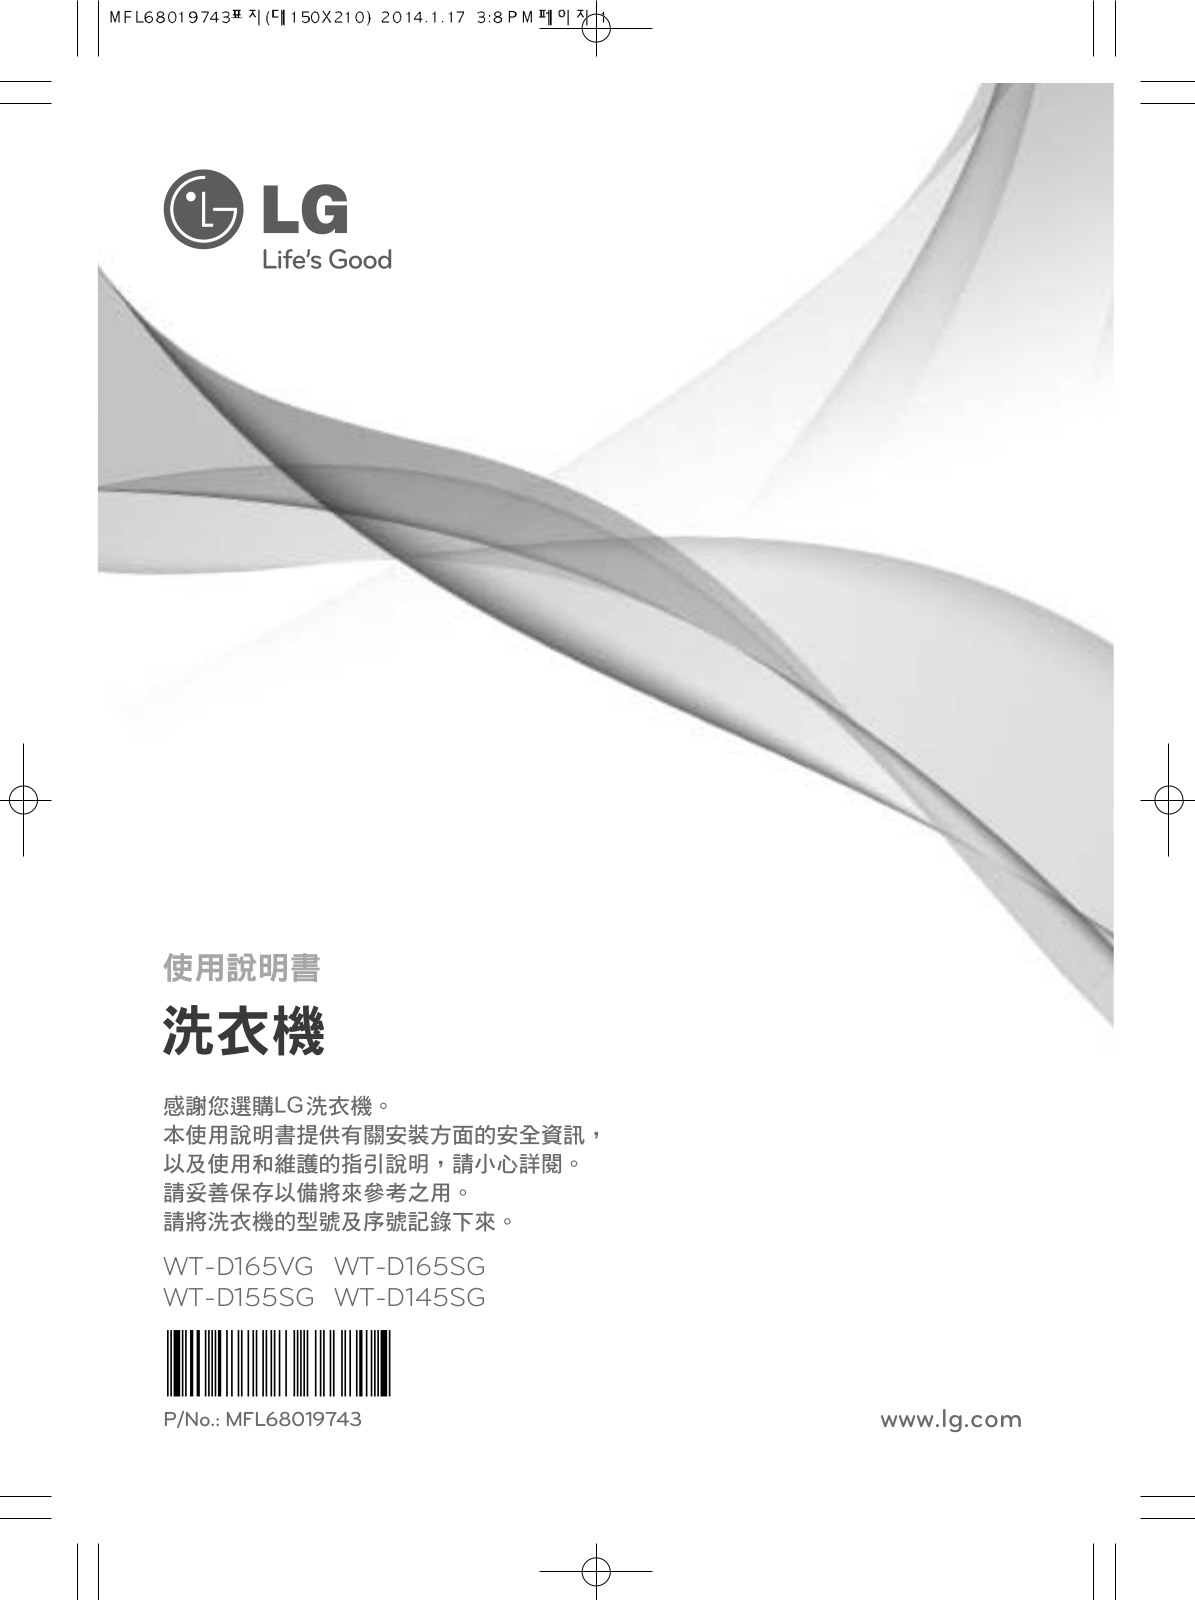 LG WT-D145SG User manual